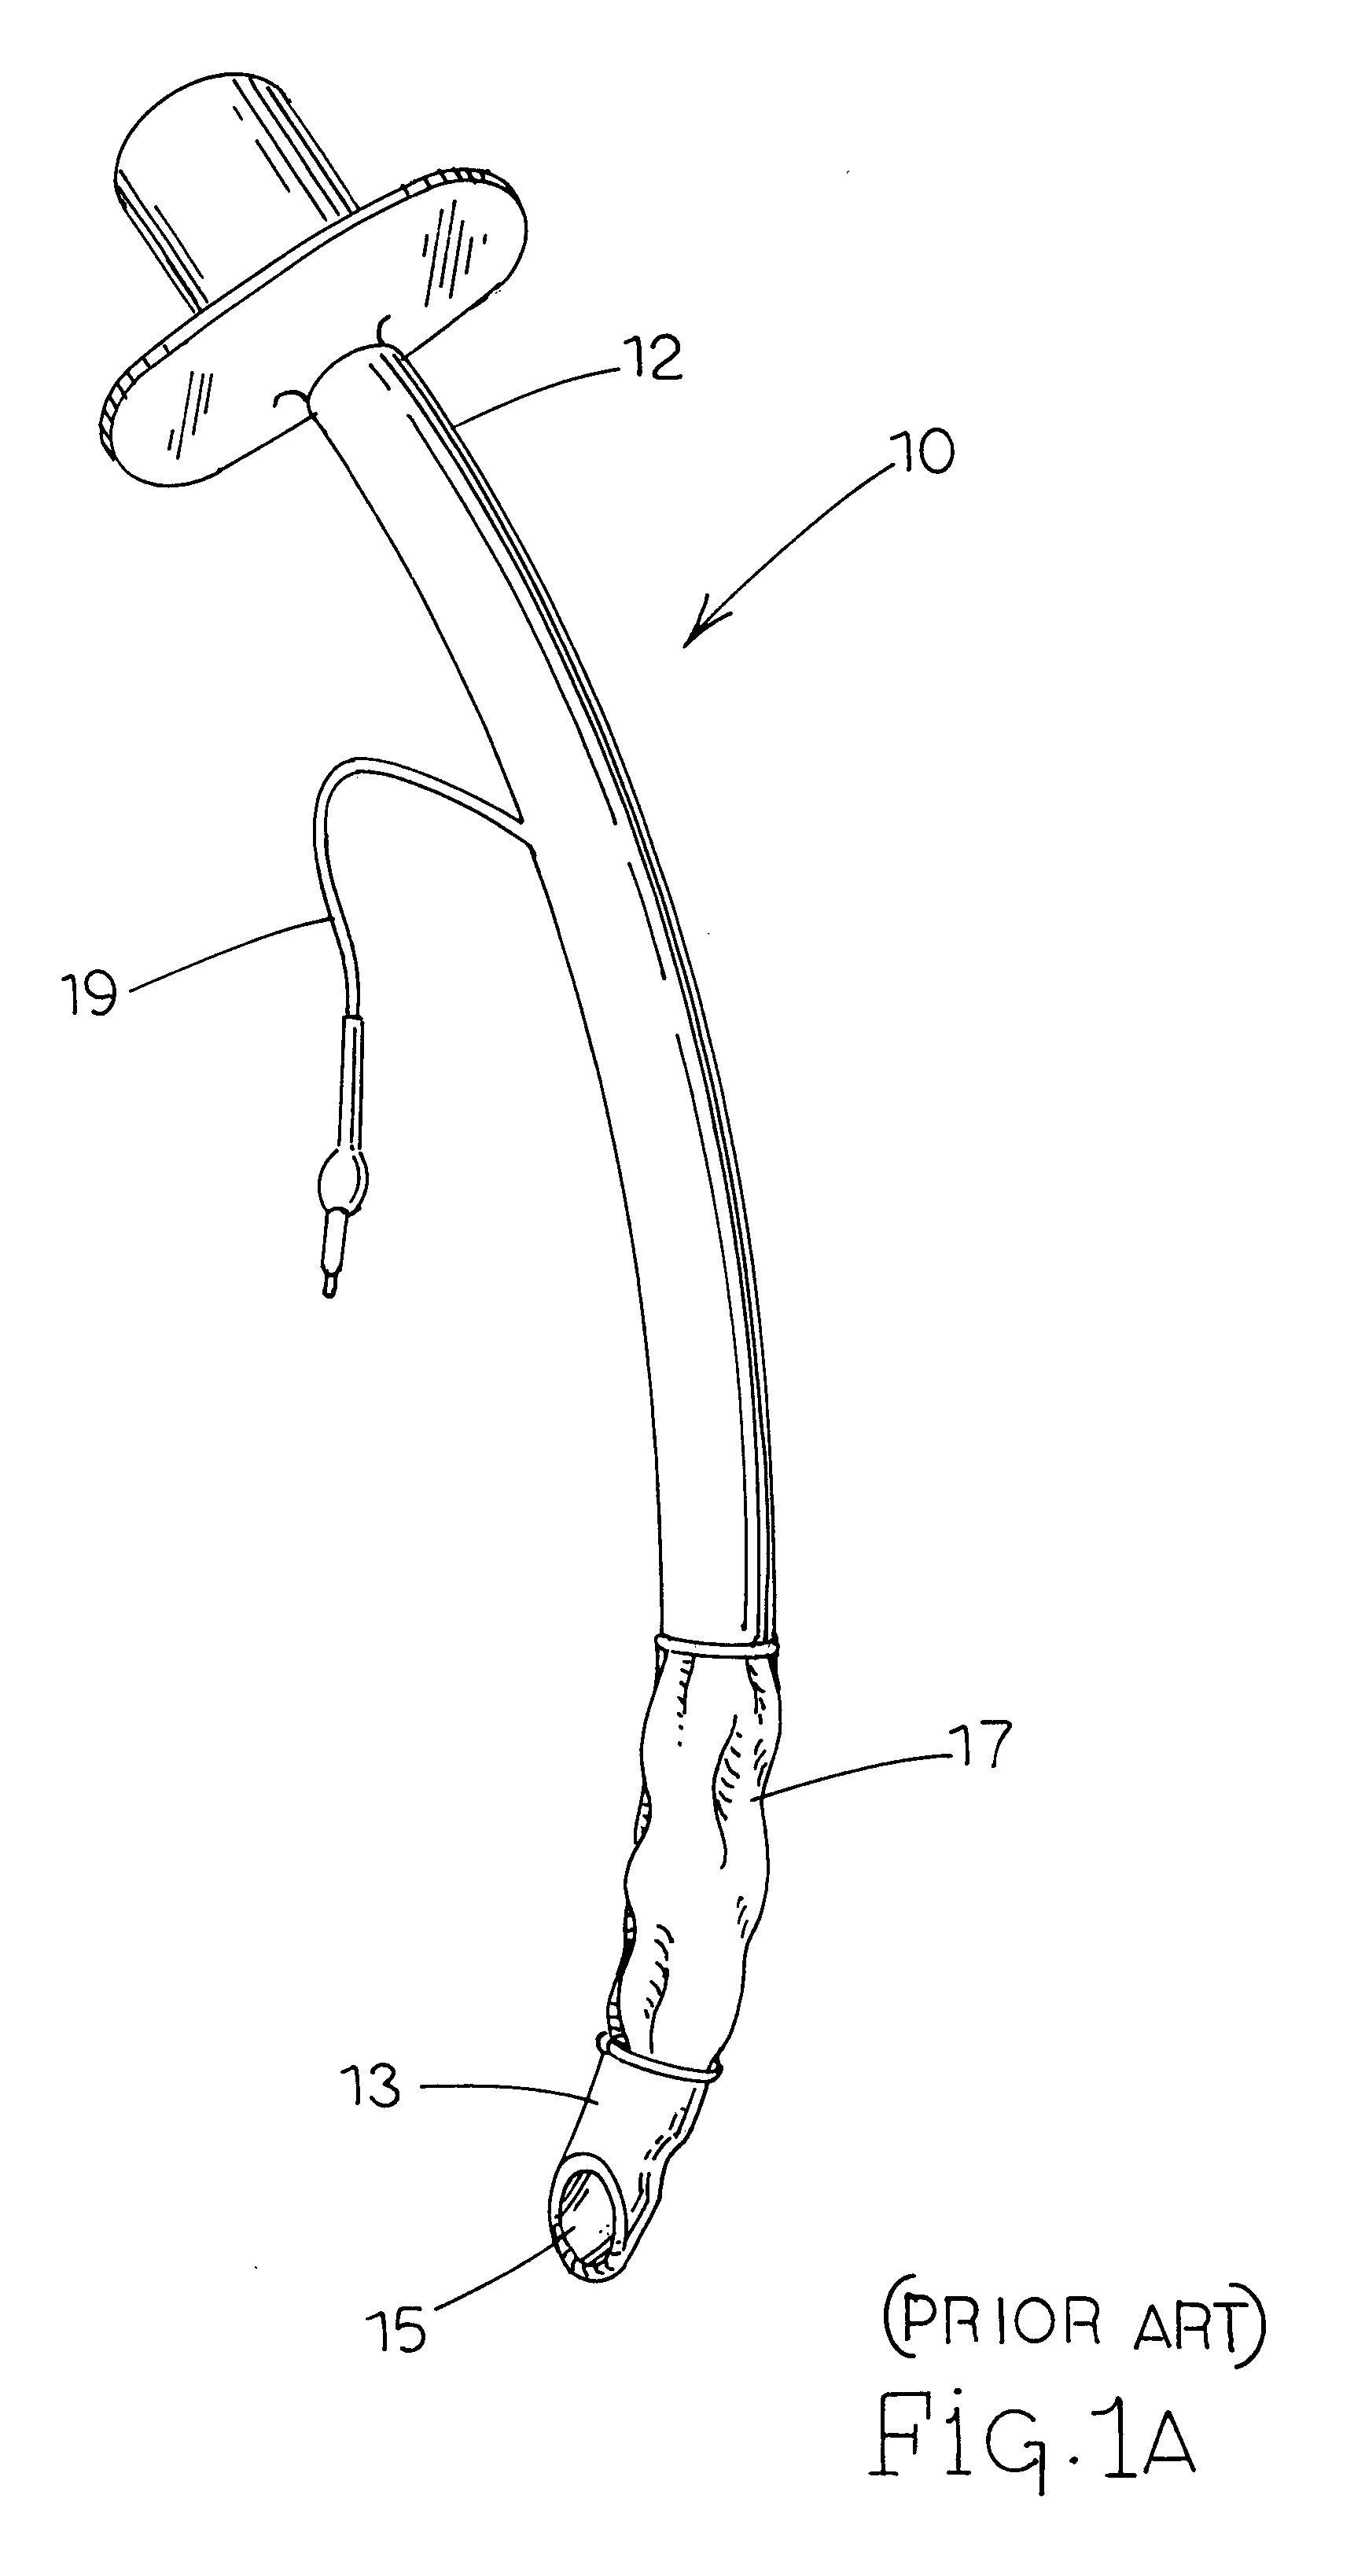 Separable double lumen endotracheal tube